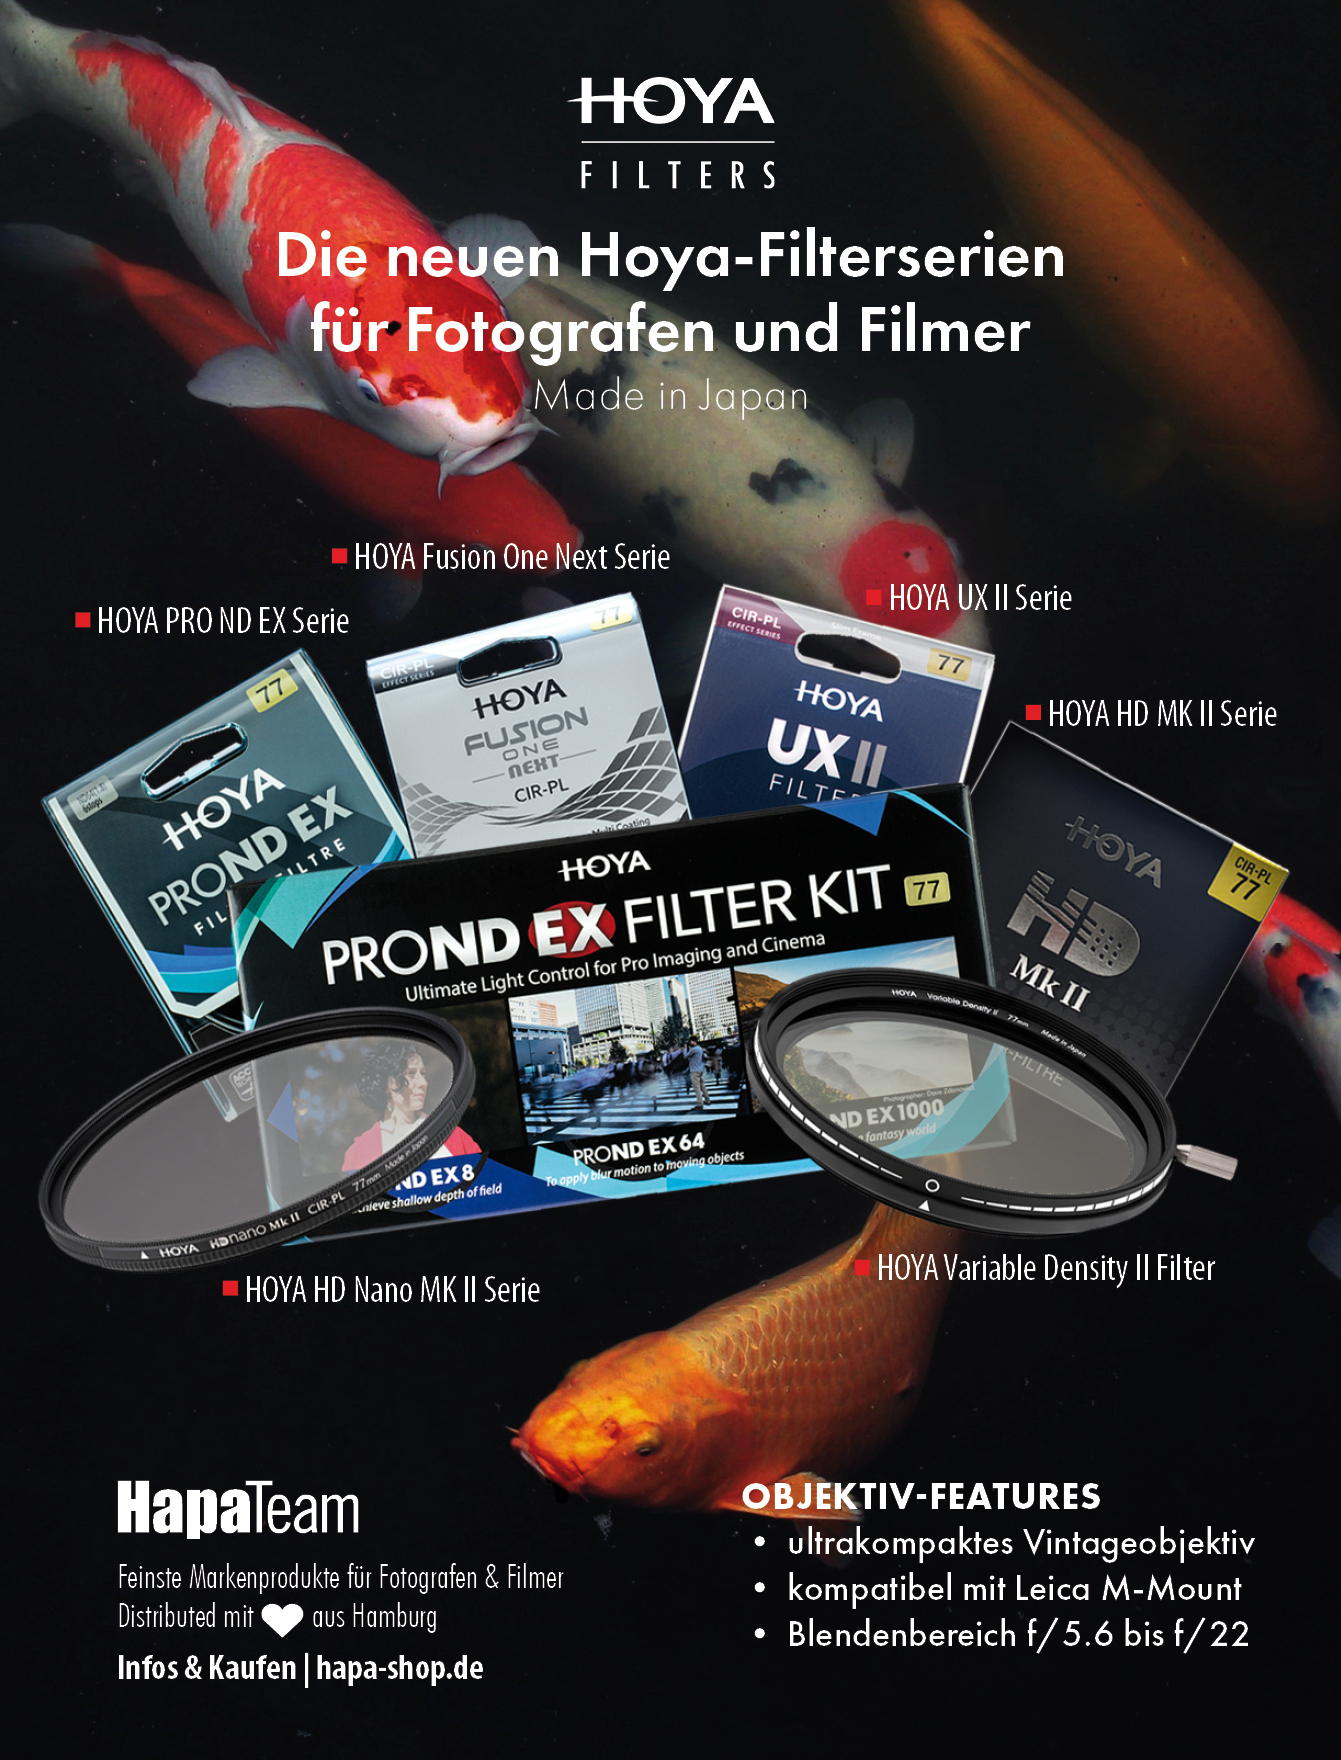 Brand: HOYA Filters